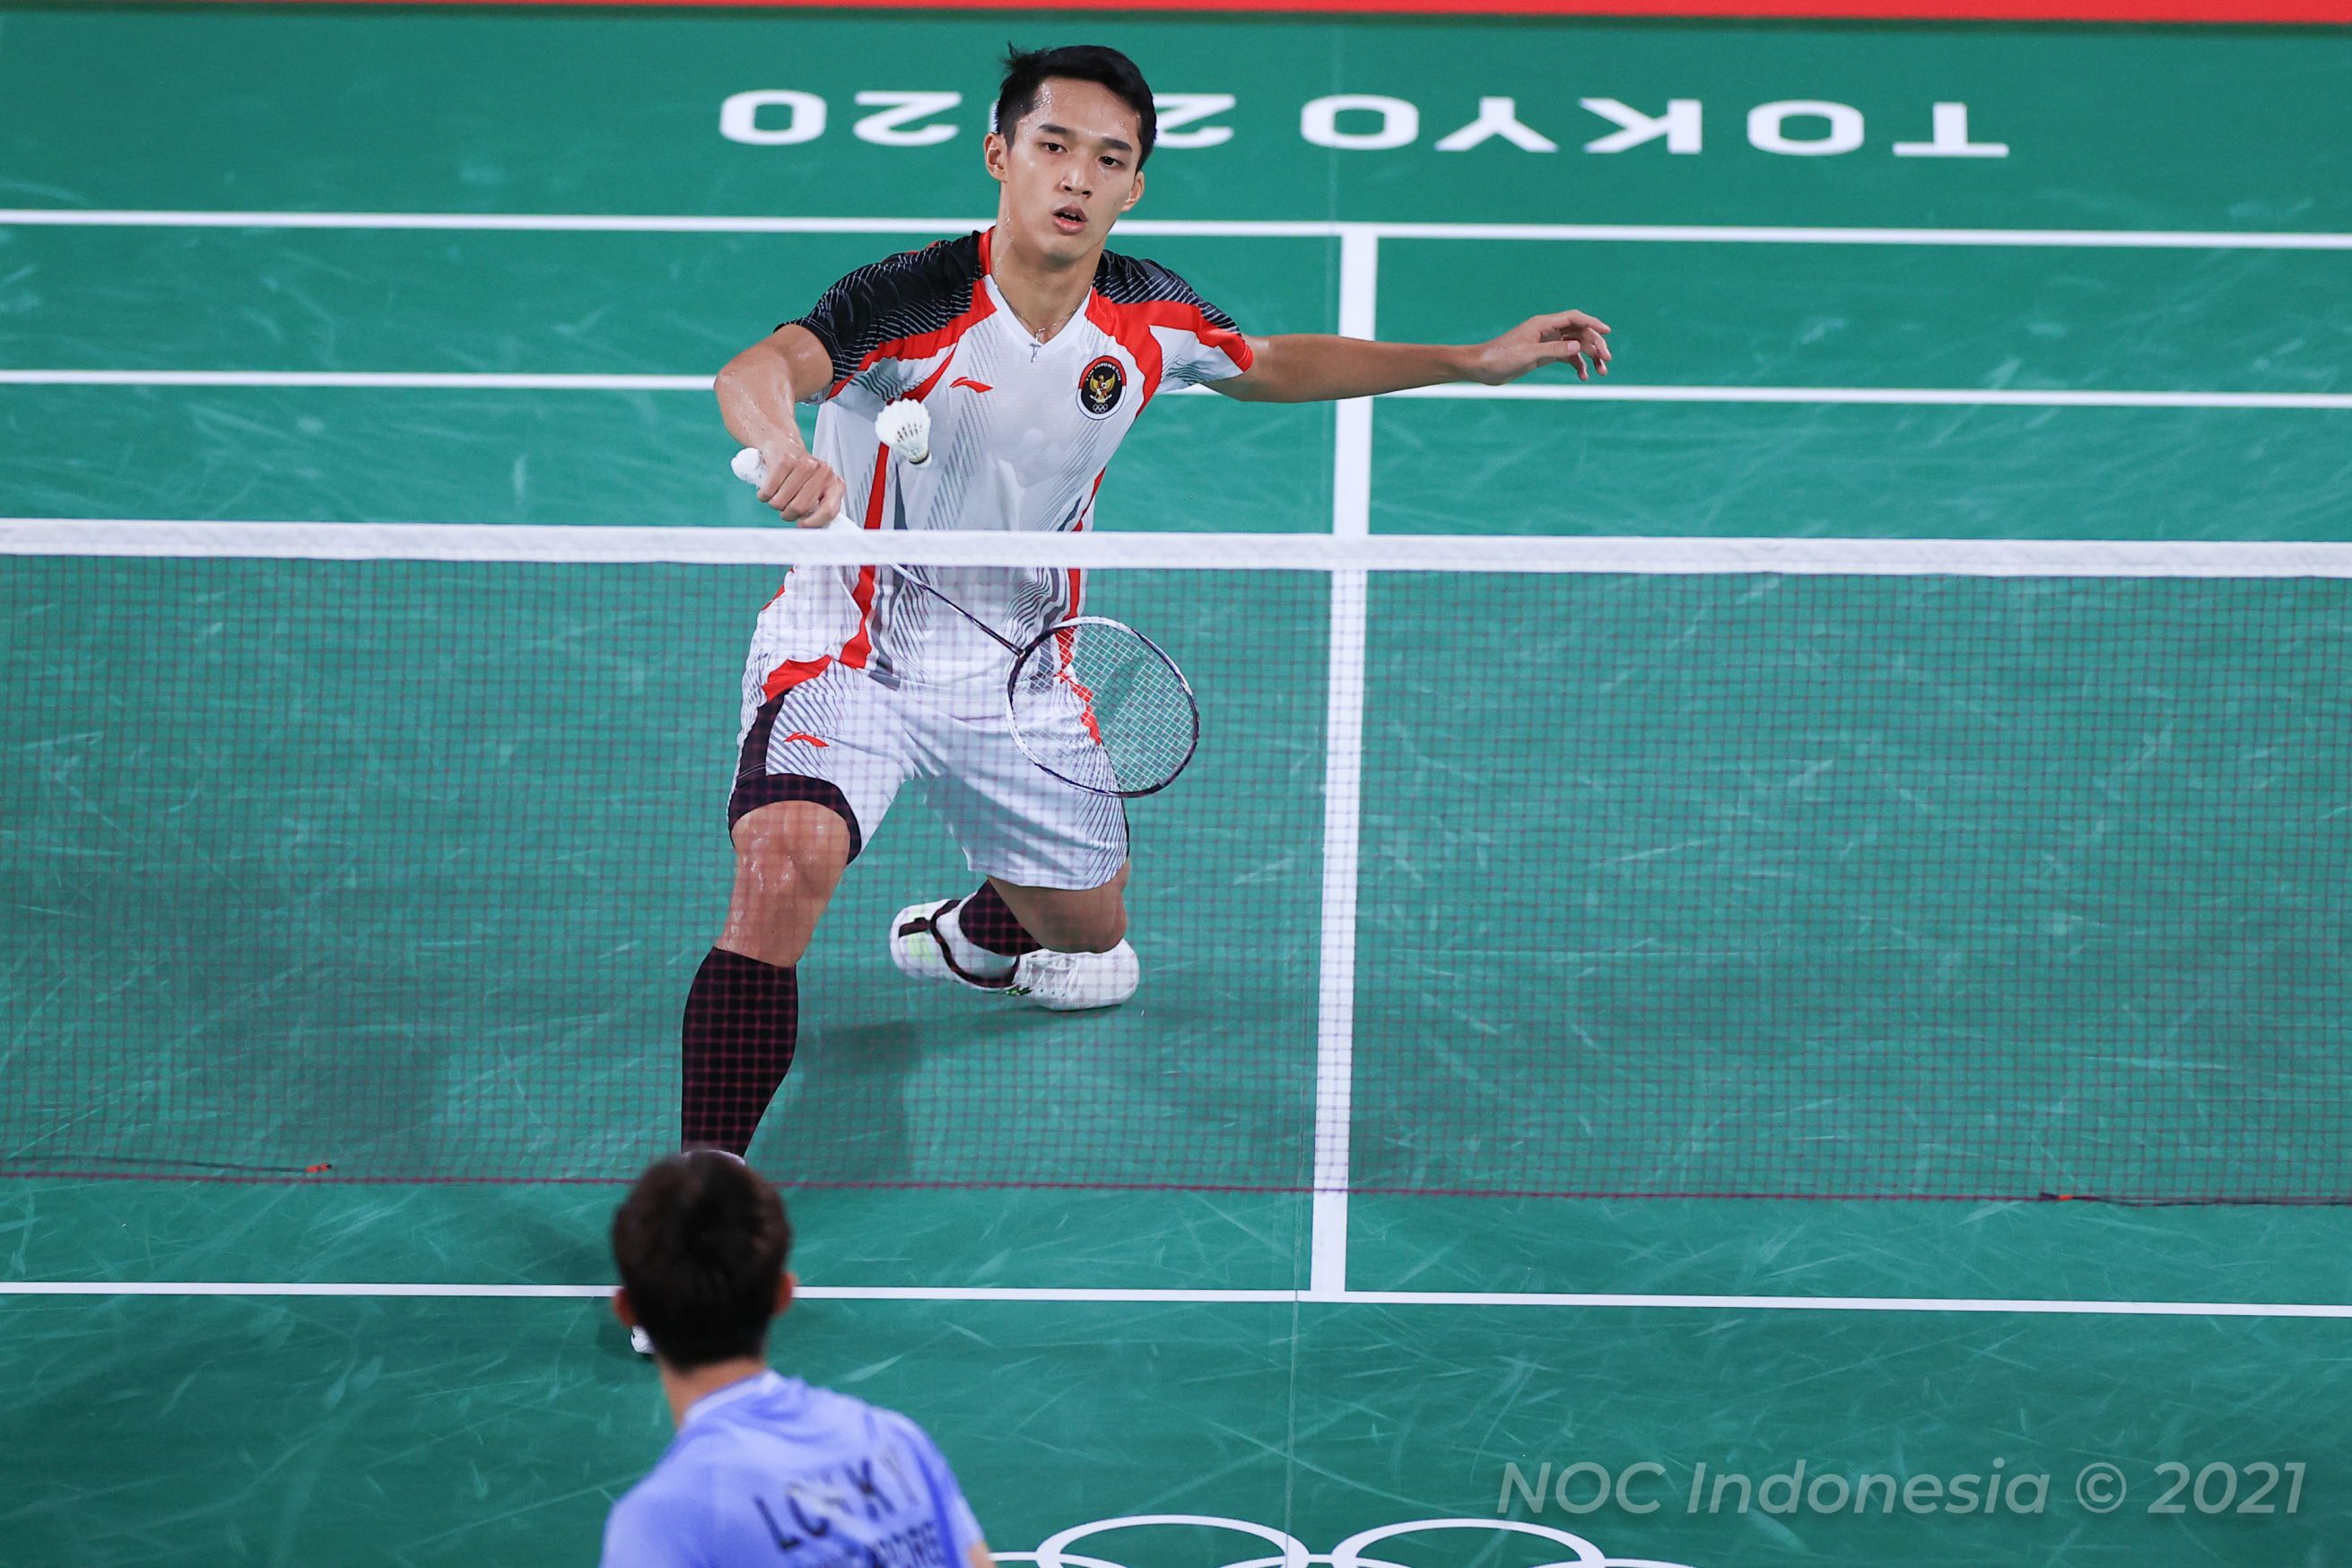 Jojo safely through to the next round - Indonesia Olympic Commitee